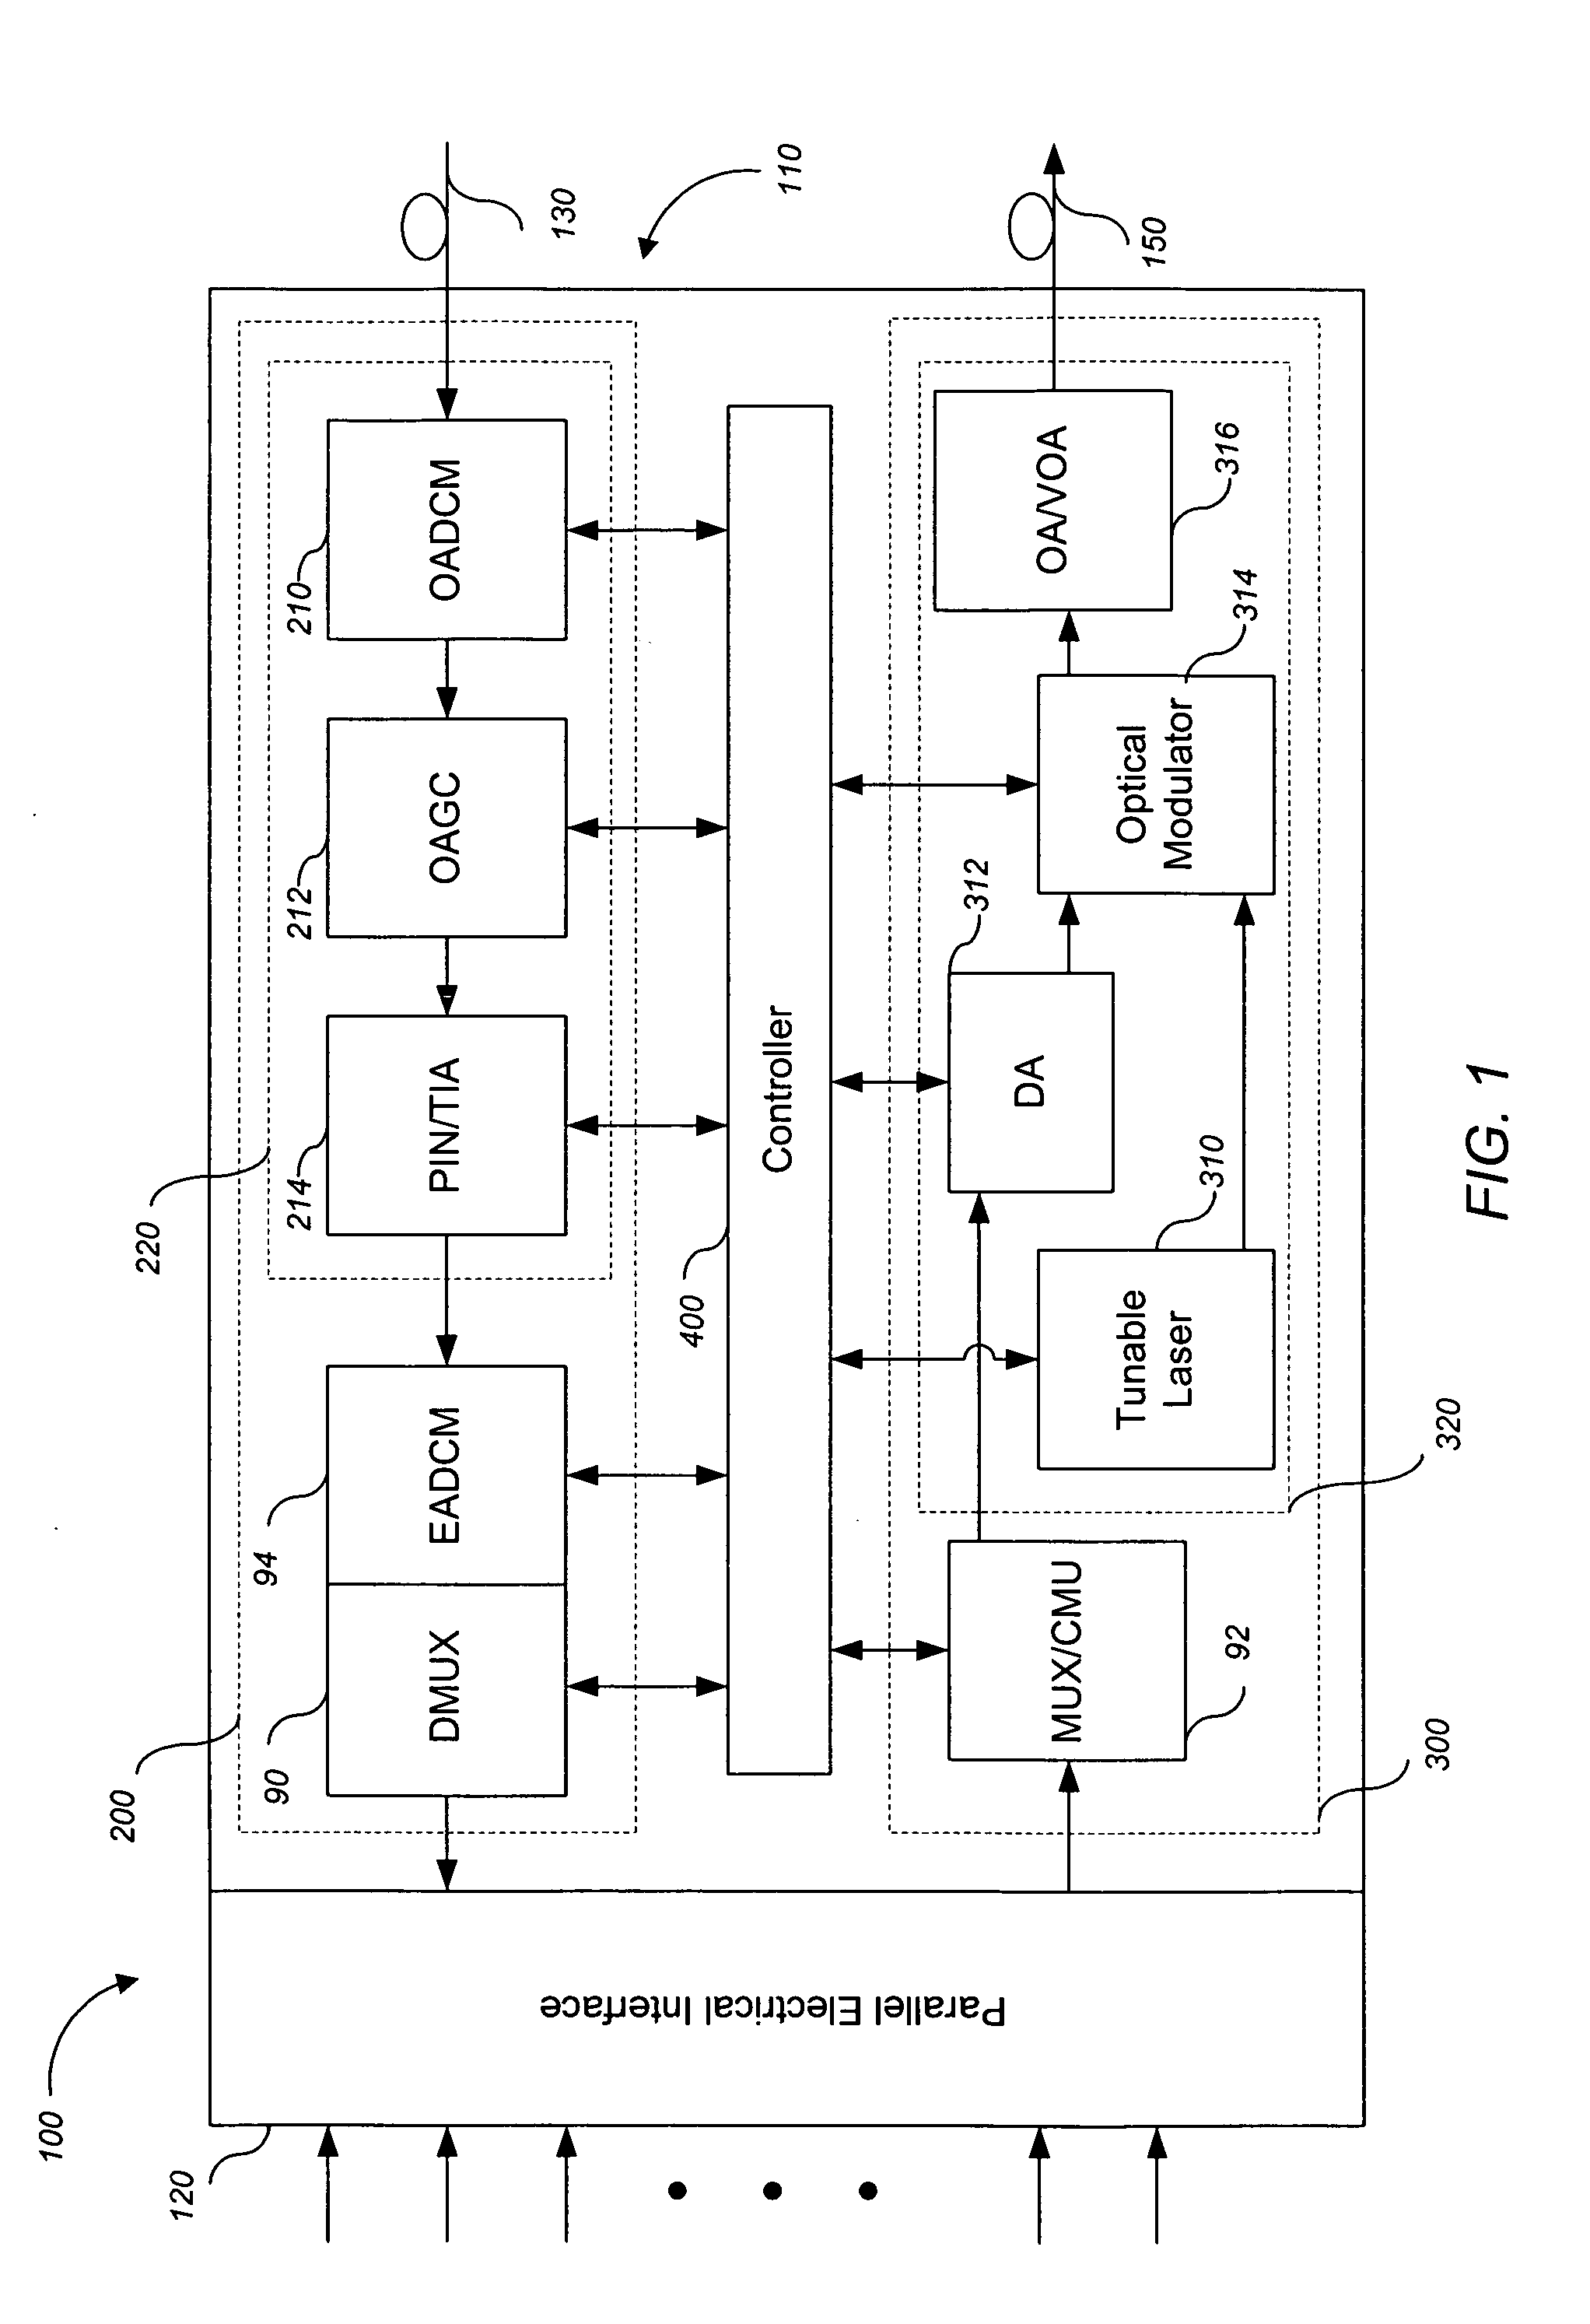 Adaptive optical transponder